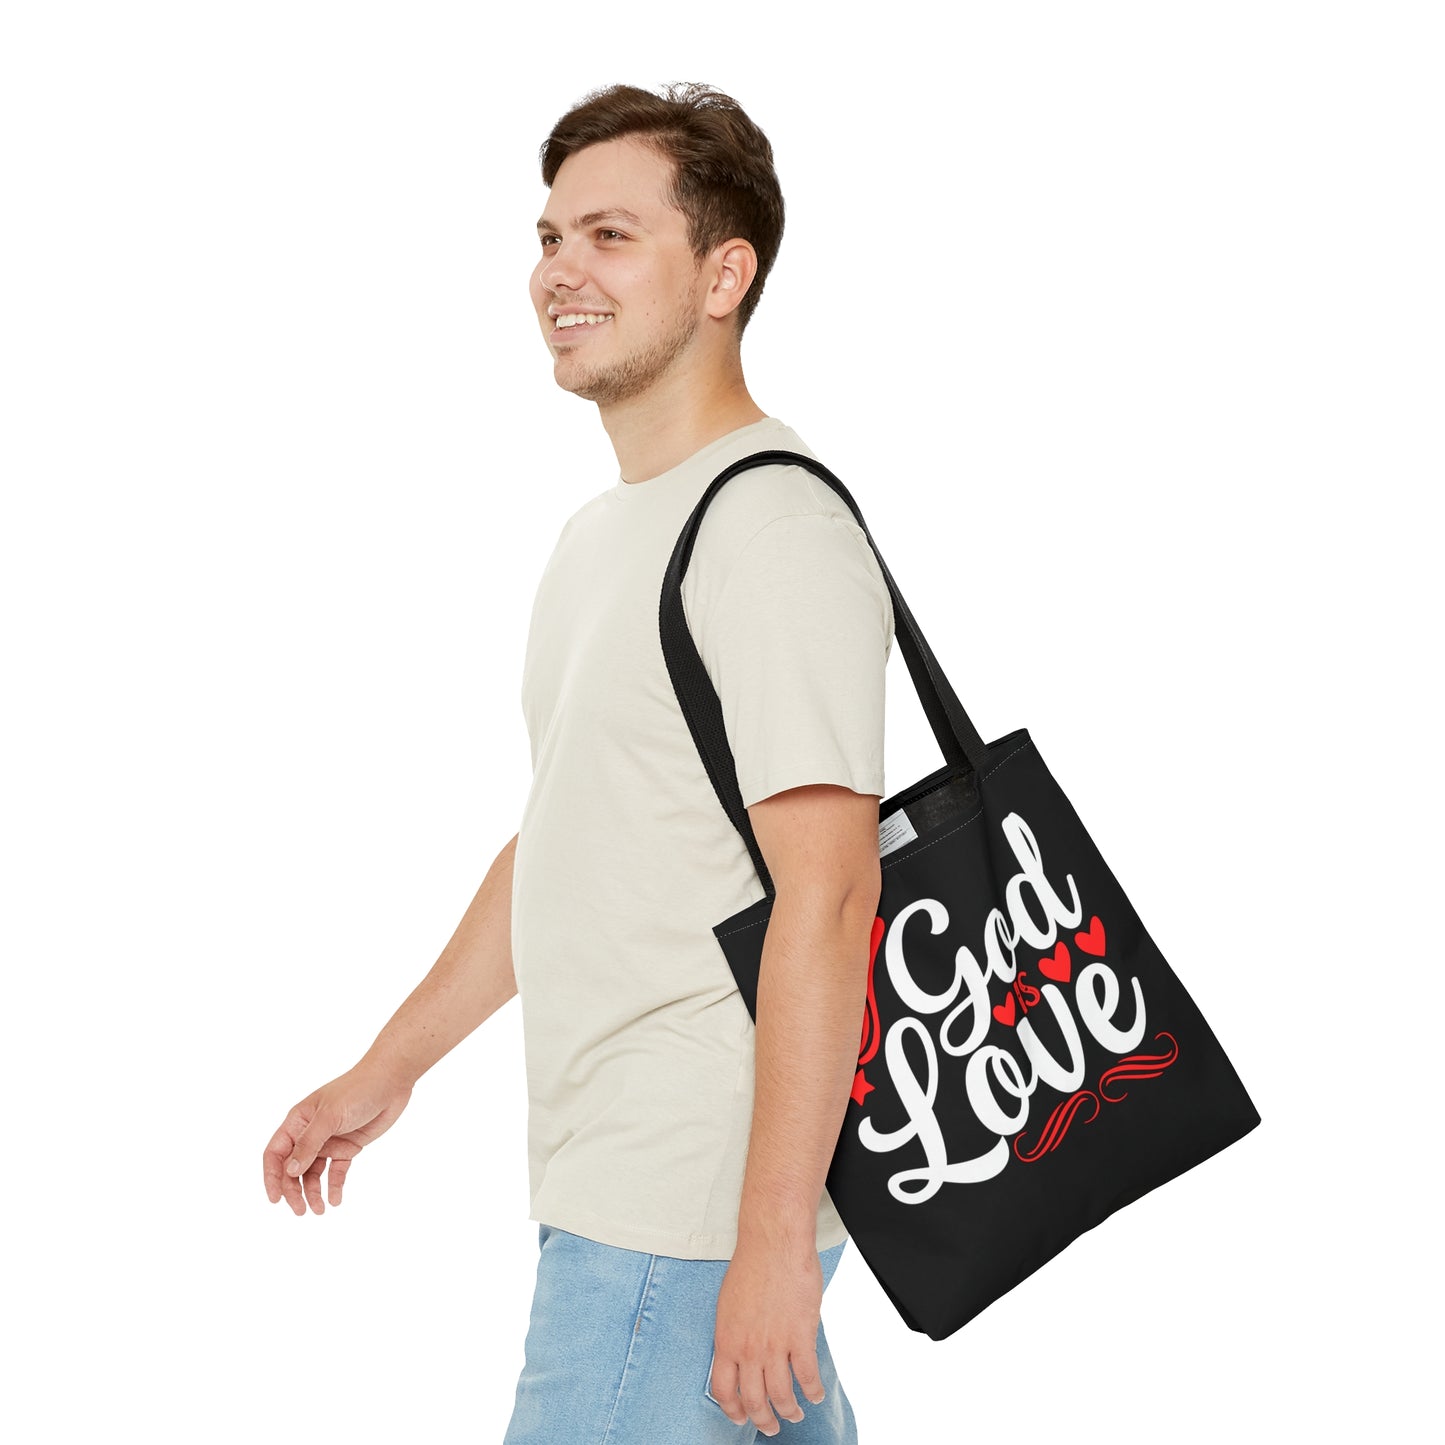 God Is Love Christian Tote Bag Printify